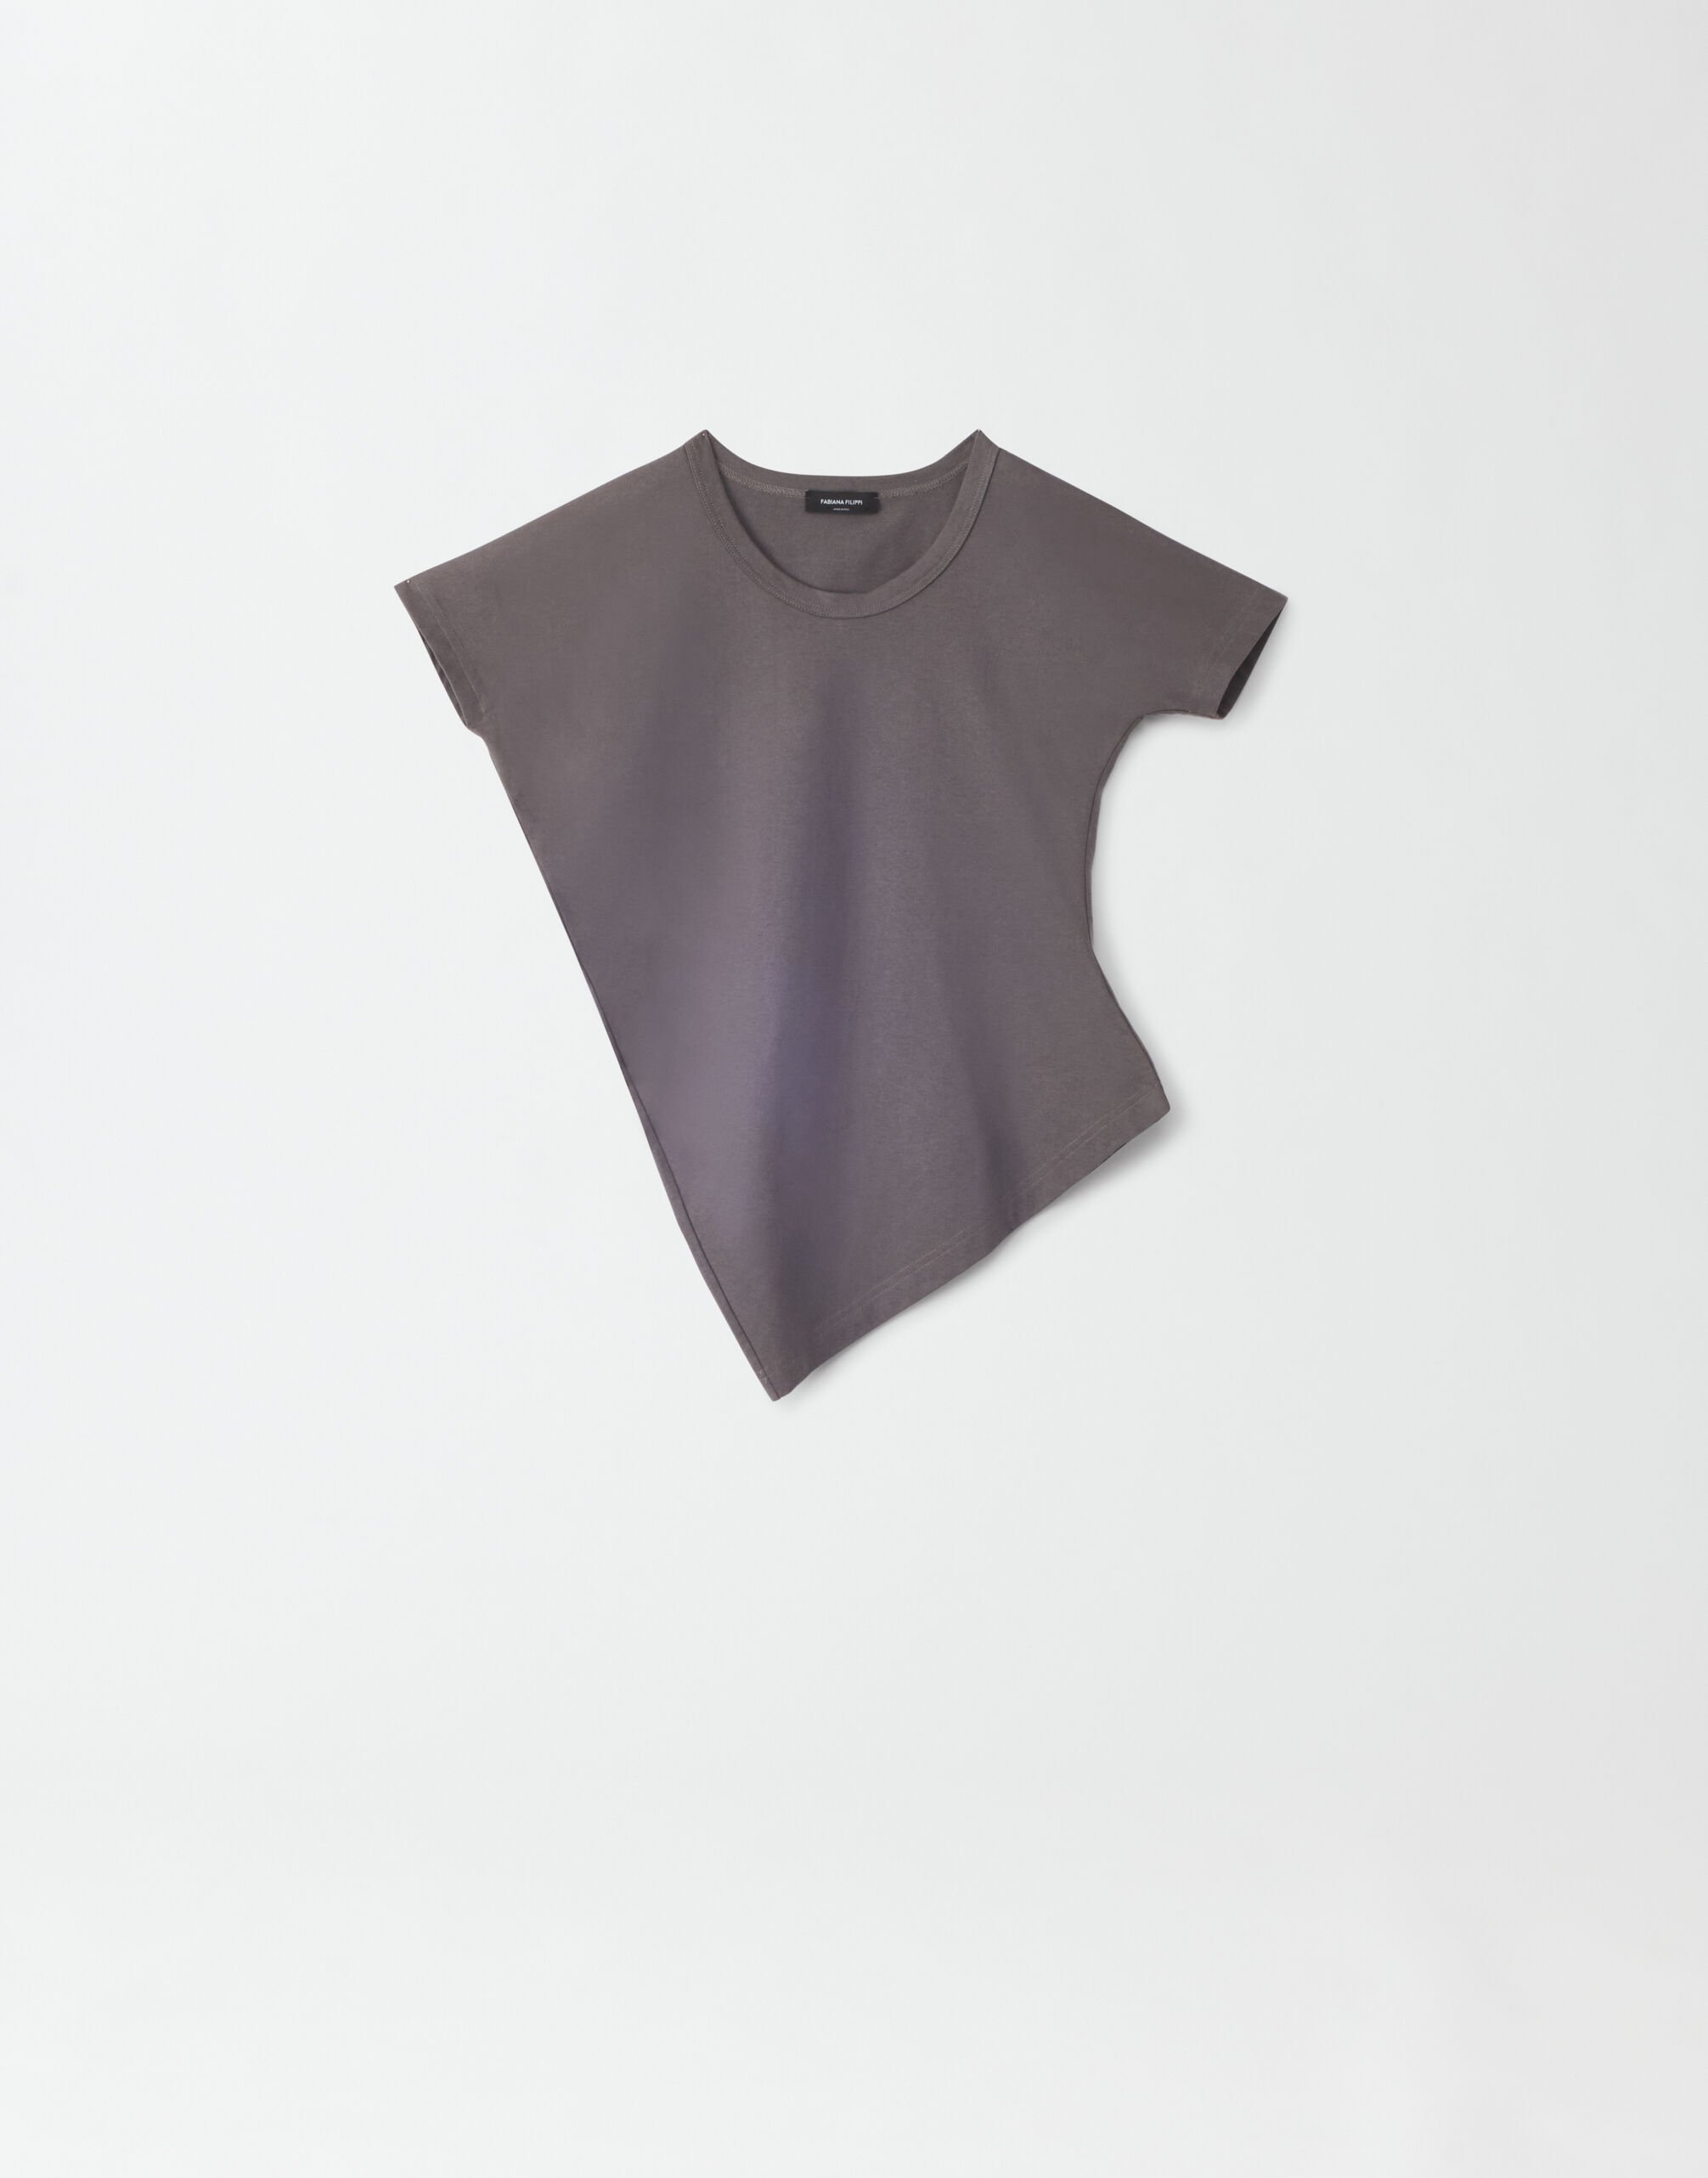 Fabiana Filippi T-shirt asimmetrica in jersey, grigio scuro BIANCO TPD274F225V6910000